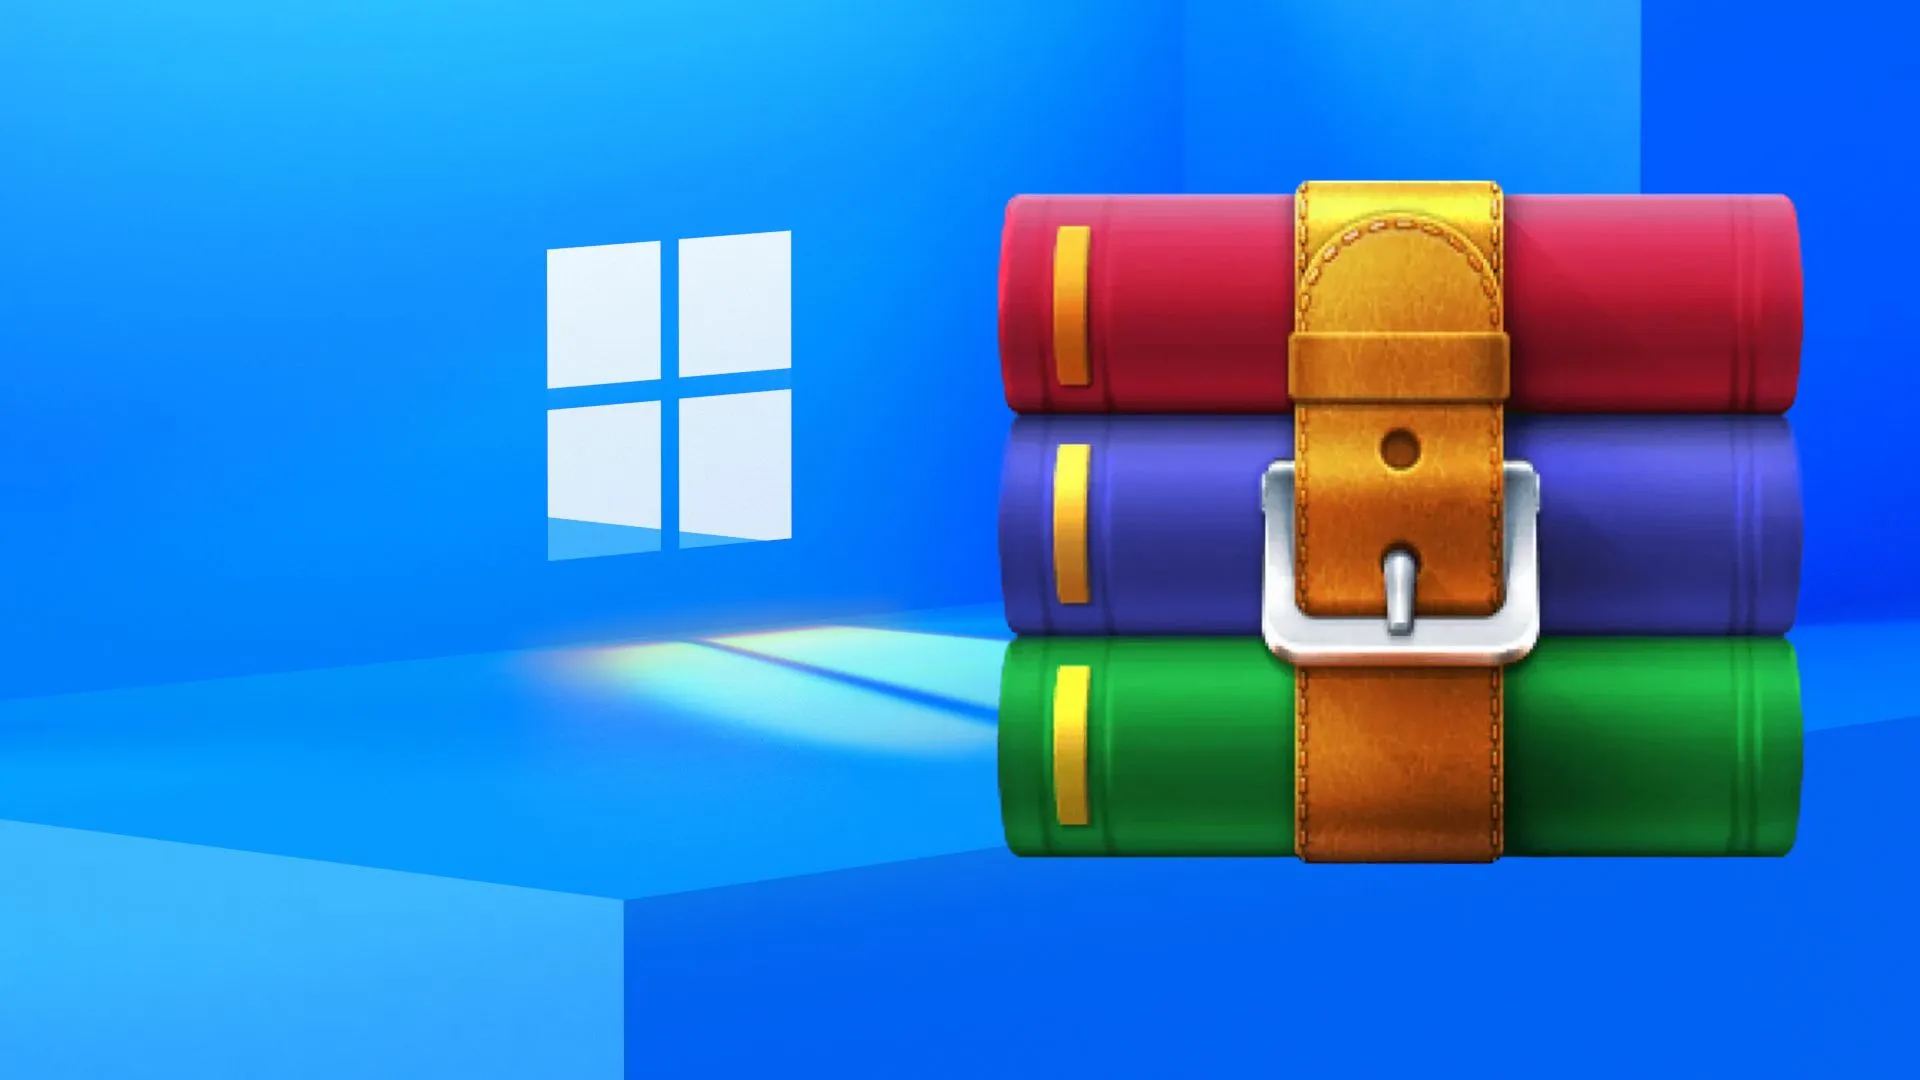 Windows 11 Winrar